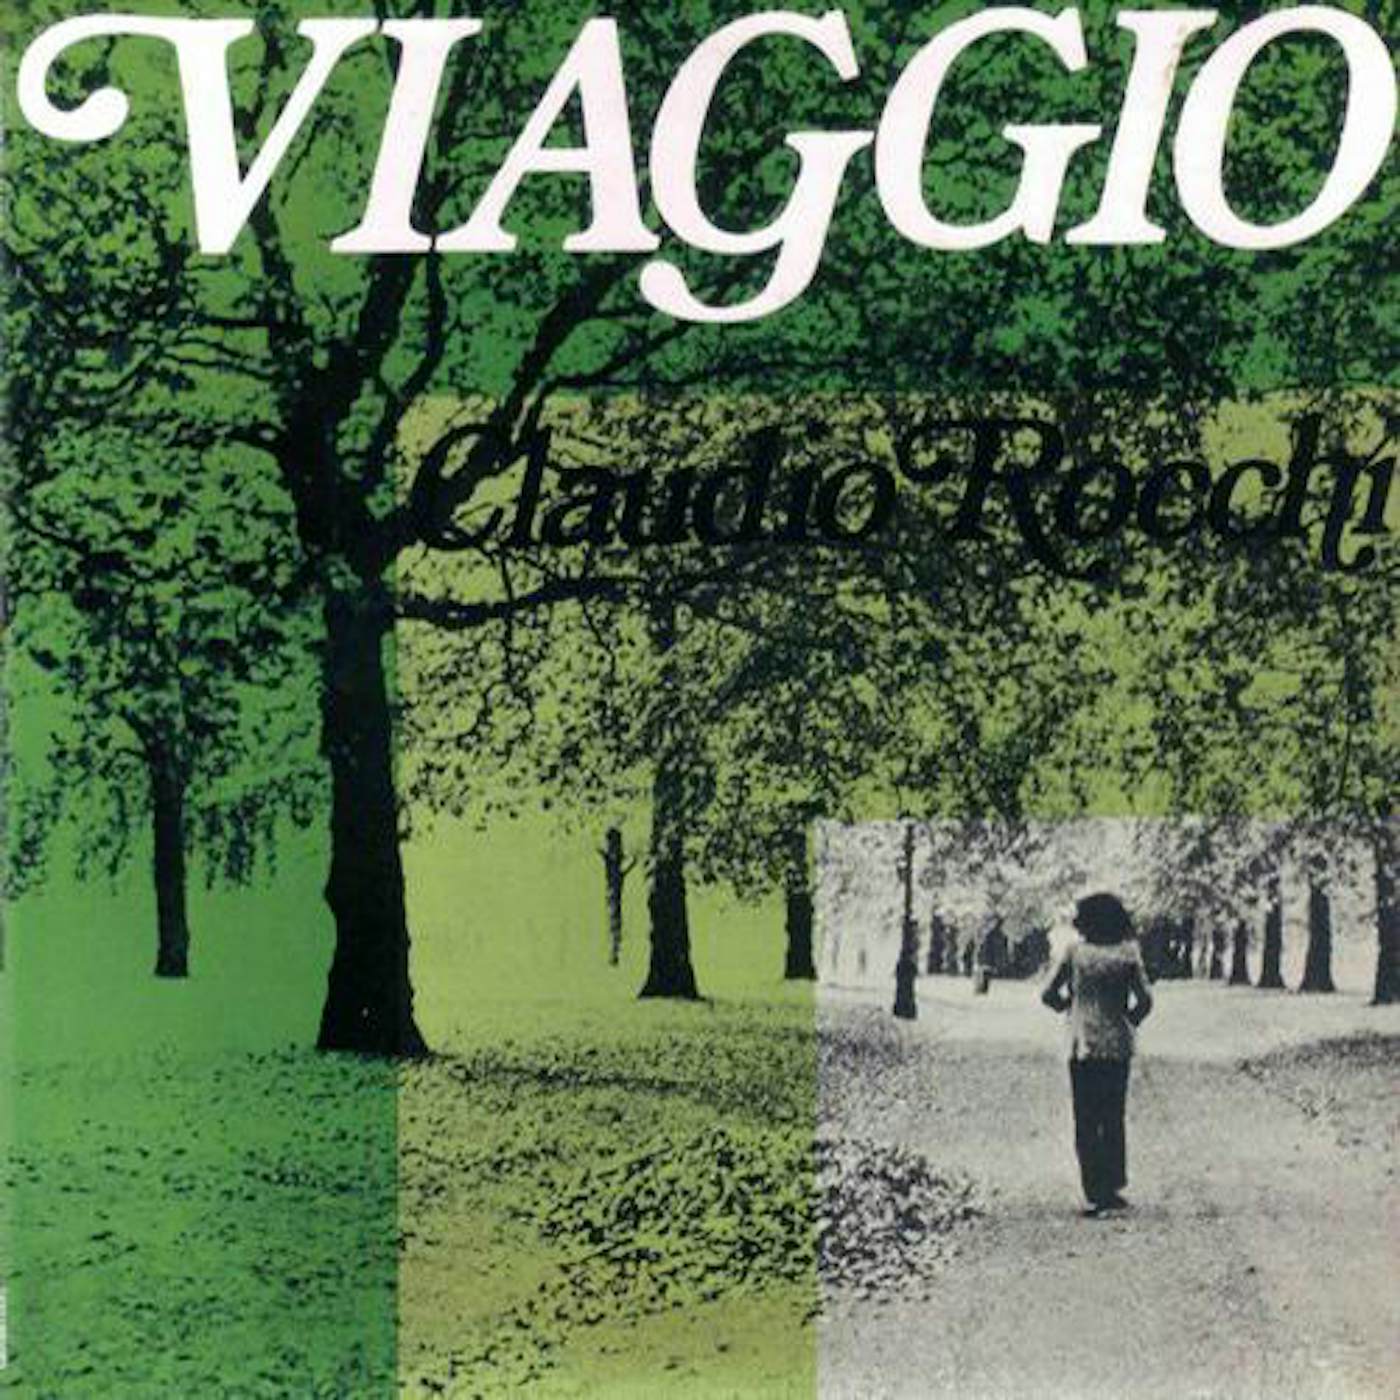 Claudio Rocchi Viaggio vinyl record